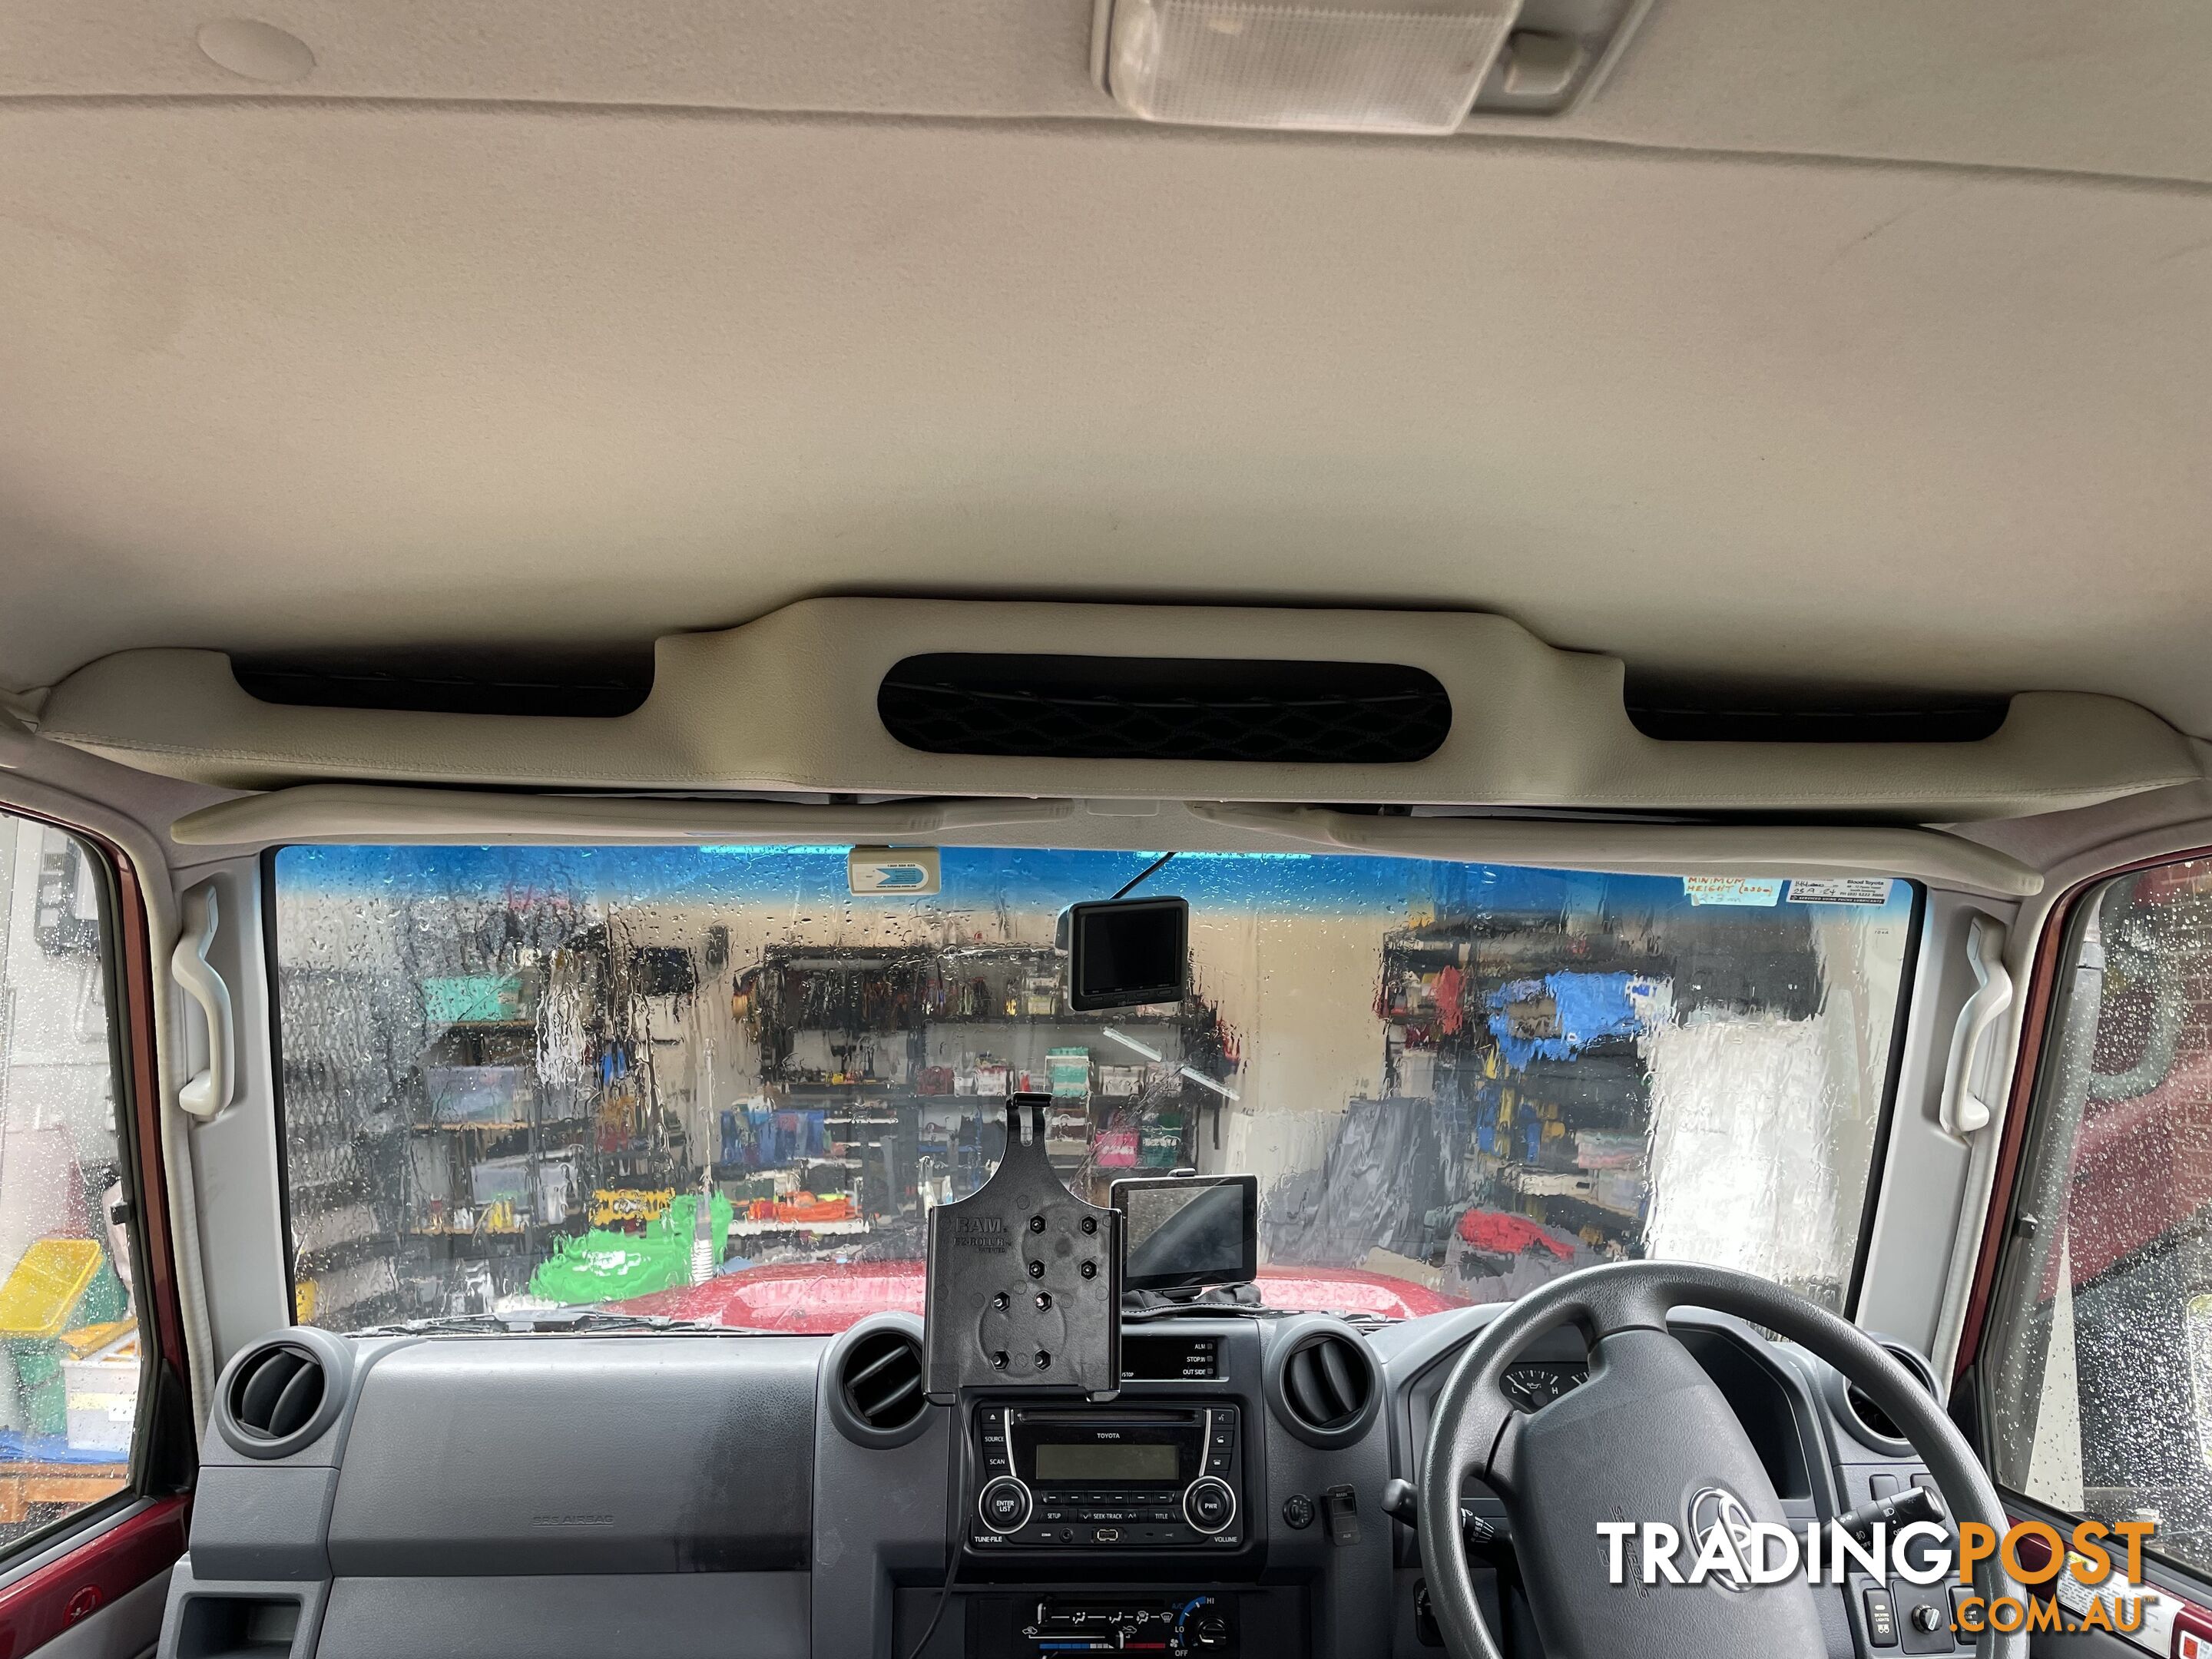 2017 Toyota Landcruiser GXL 4.5 Litre Diesel Manual Dual Cab